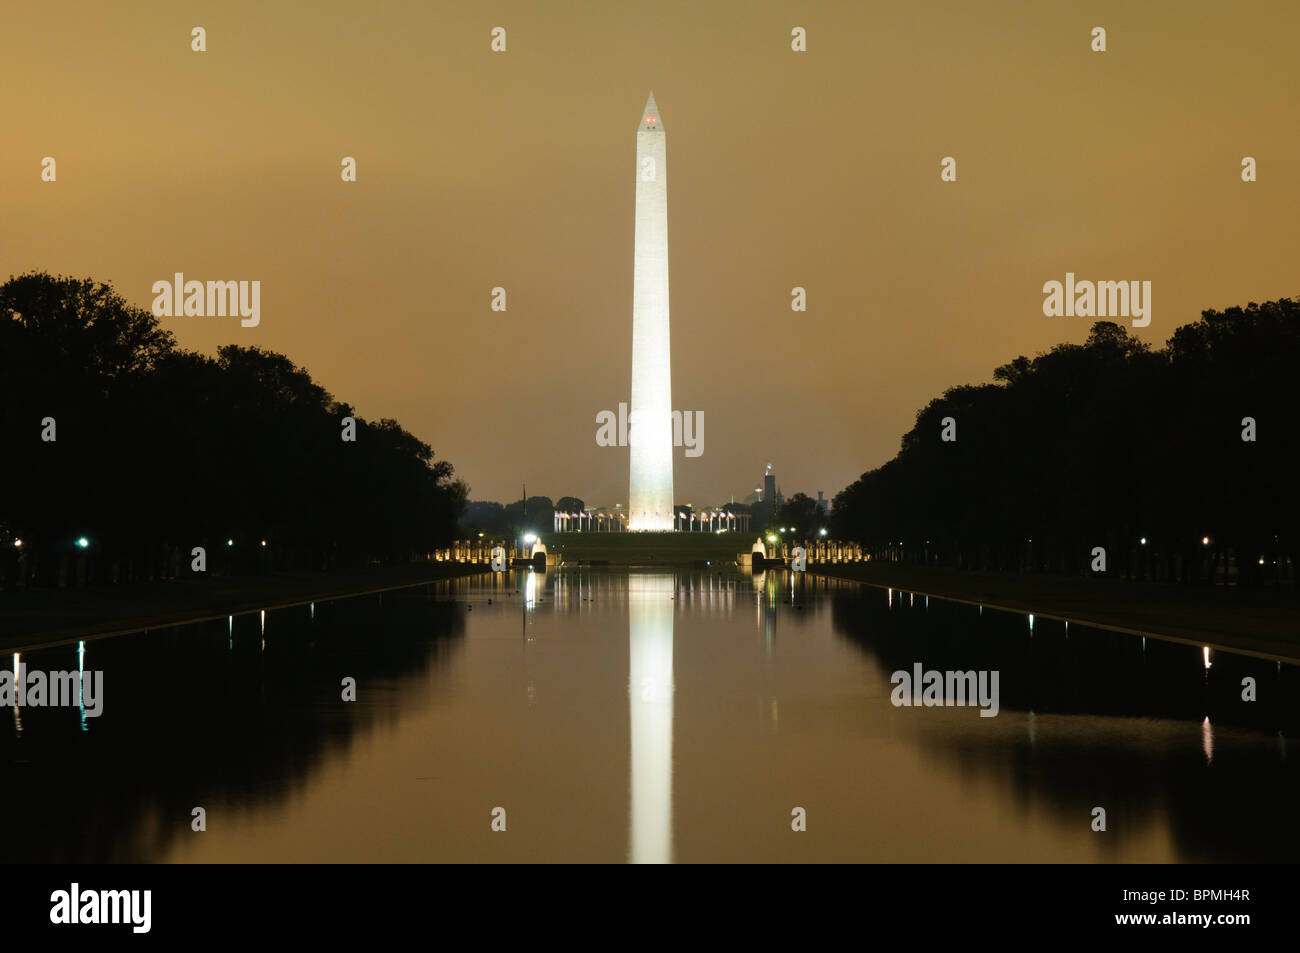 WASHINGTON DC, USA - Washington Monument reflected on the Reflecting Pool, with orange glow of city lights off low clouds Stock Photo